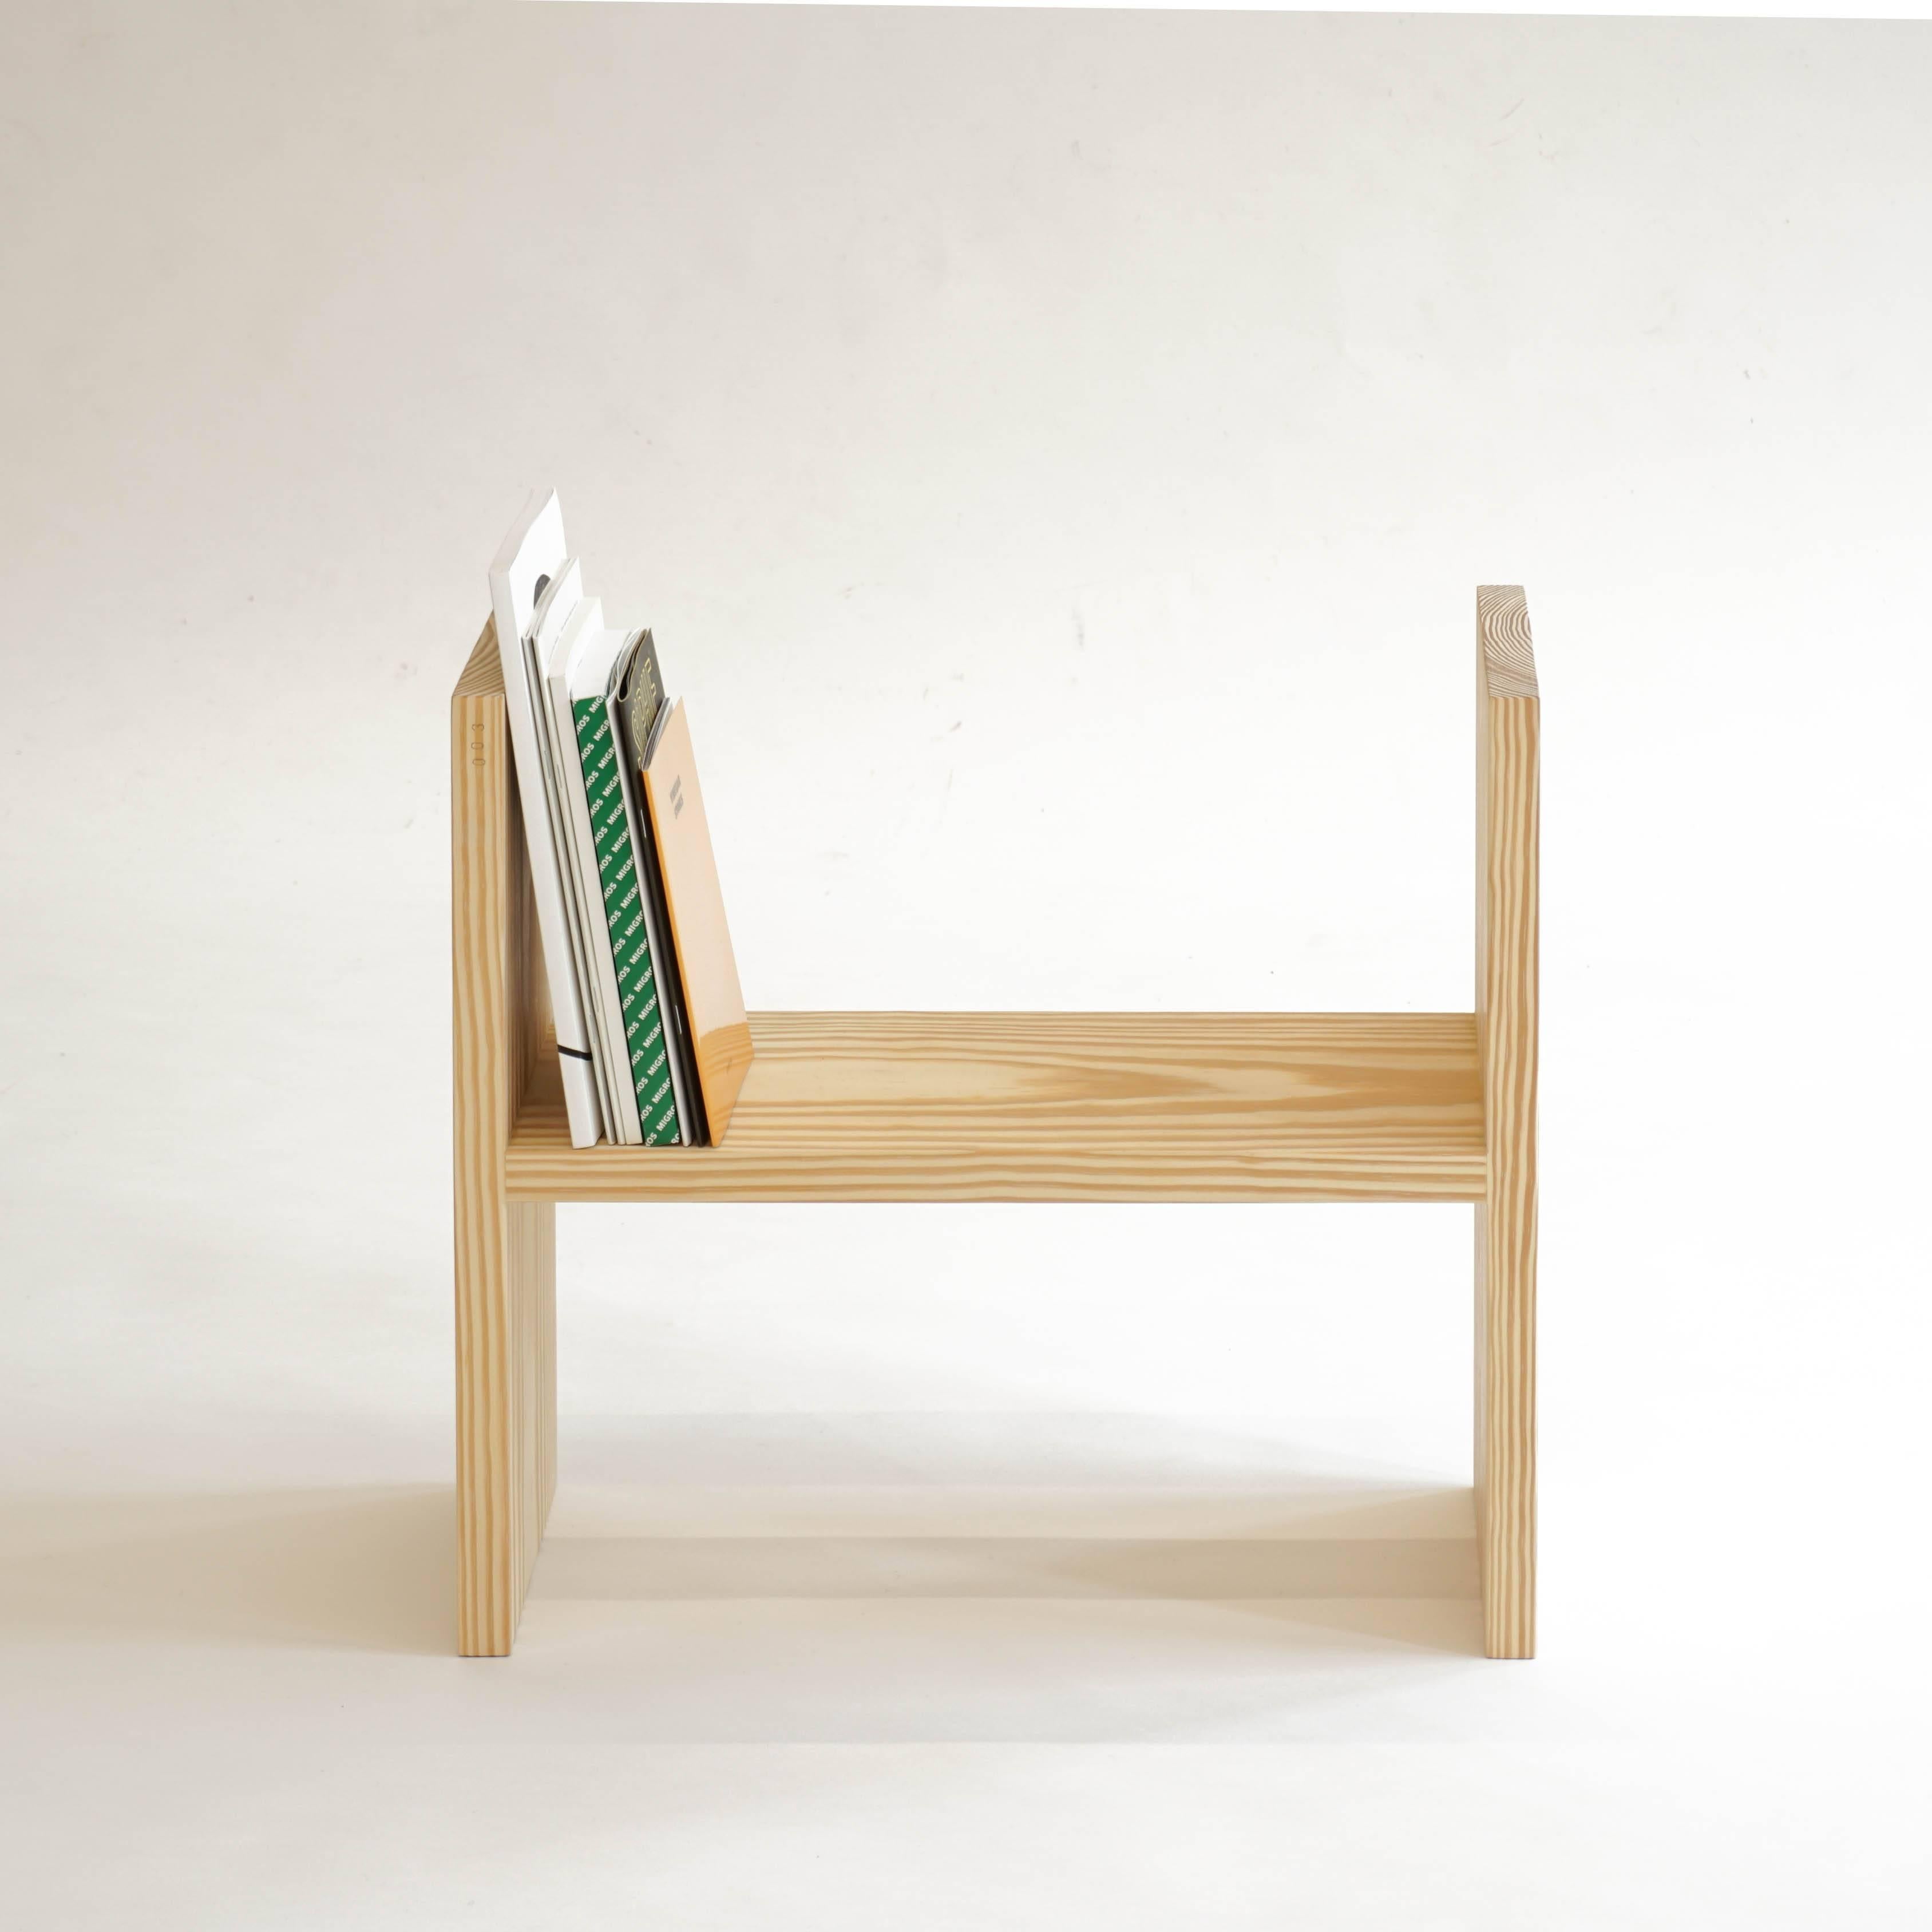 Pine Contemporary Artist Furniture, Minimal Shelve or Stool, Alexa For Sale